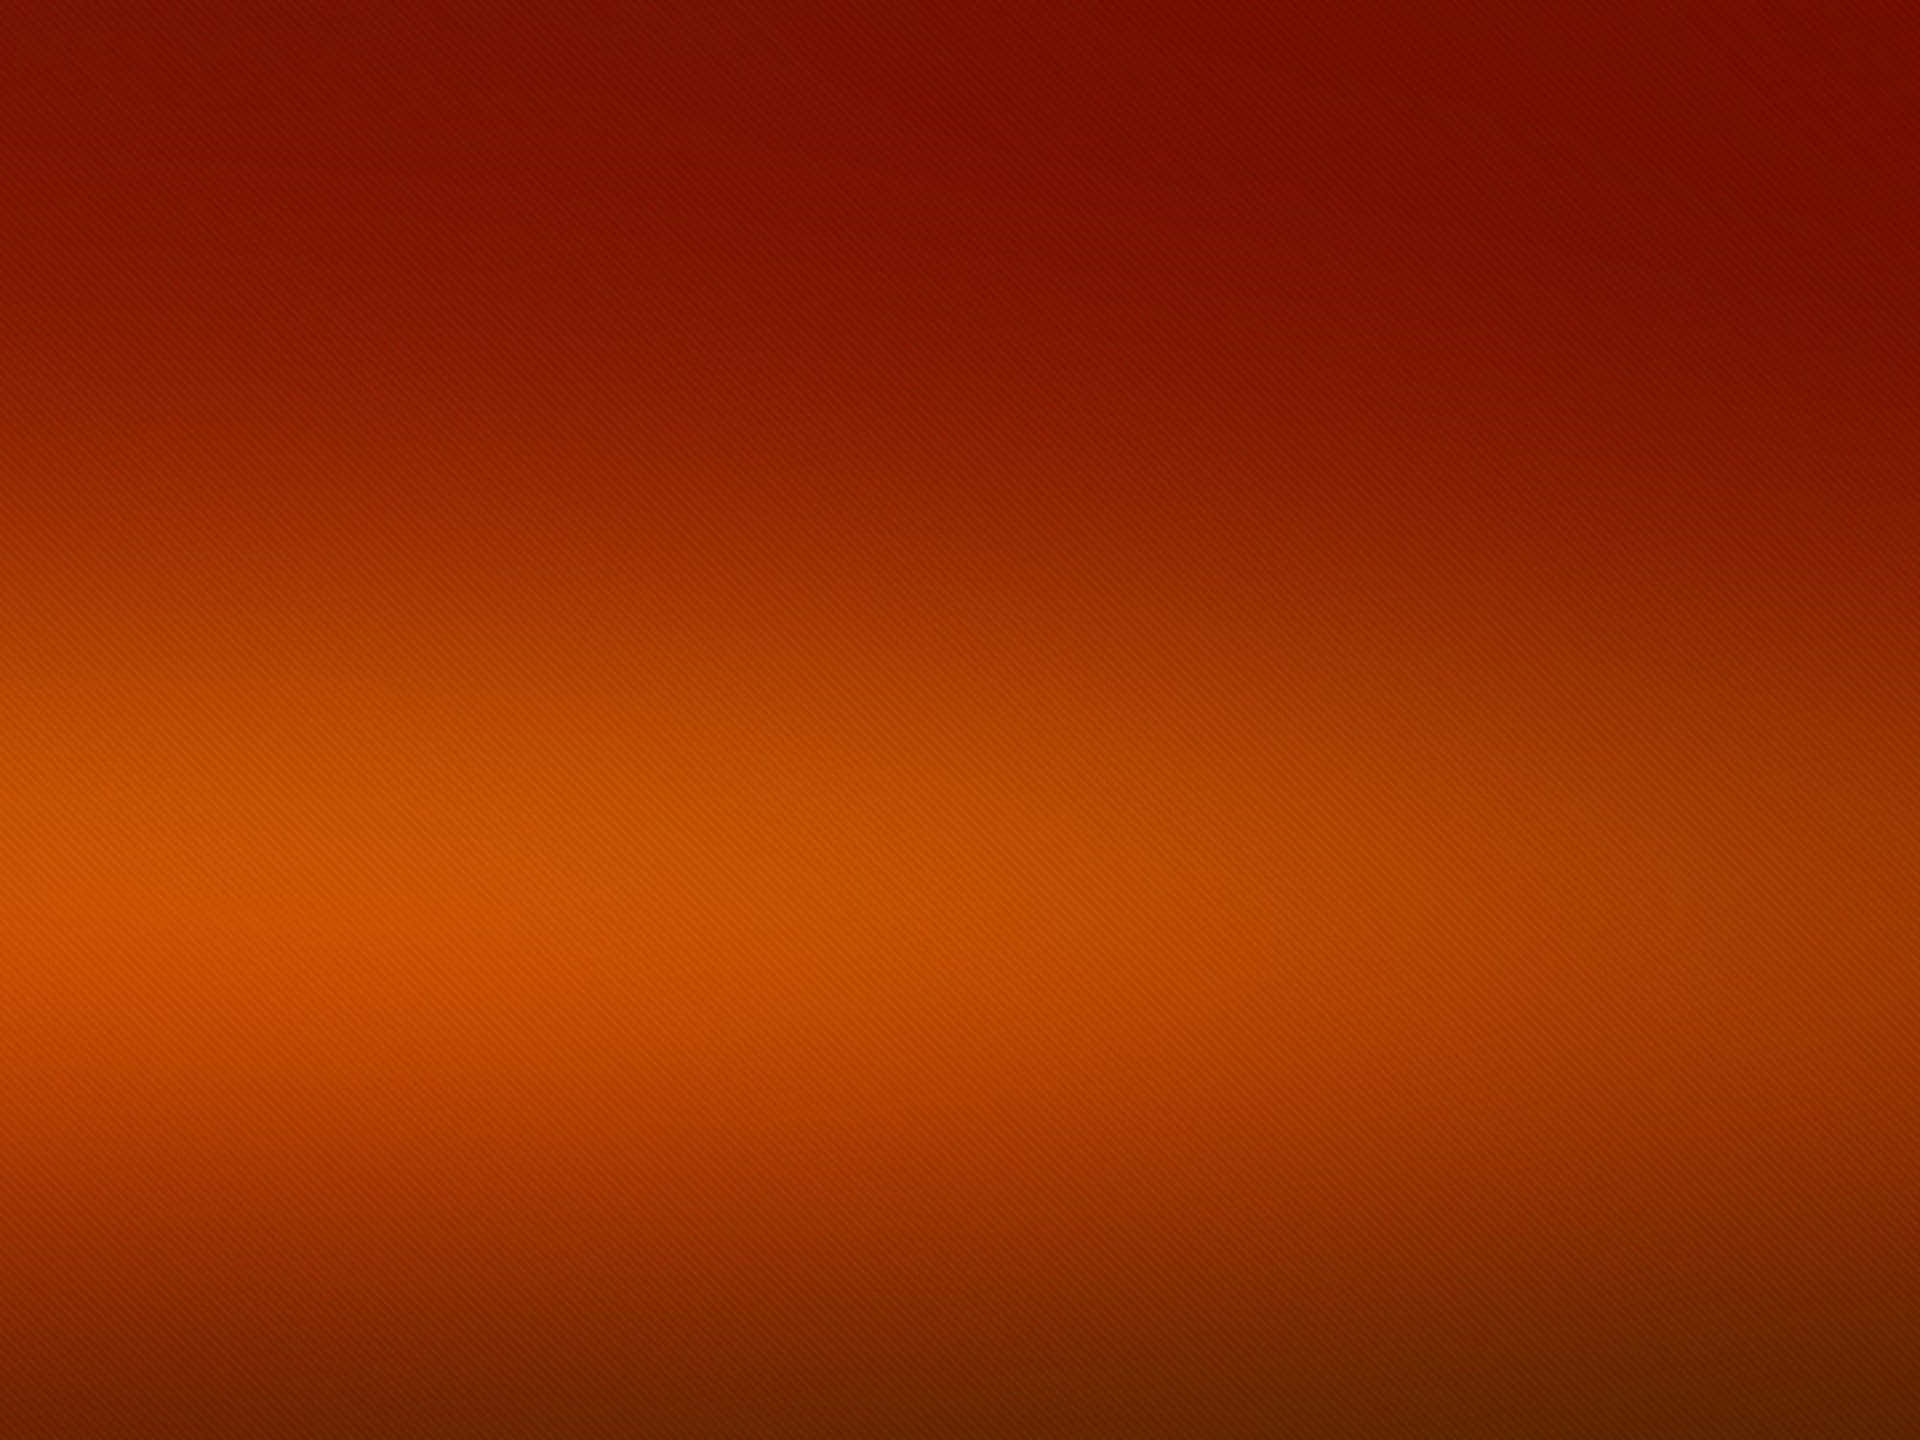 100+] Orange Gradient Background s for FREE 